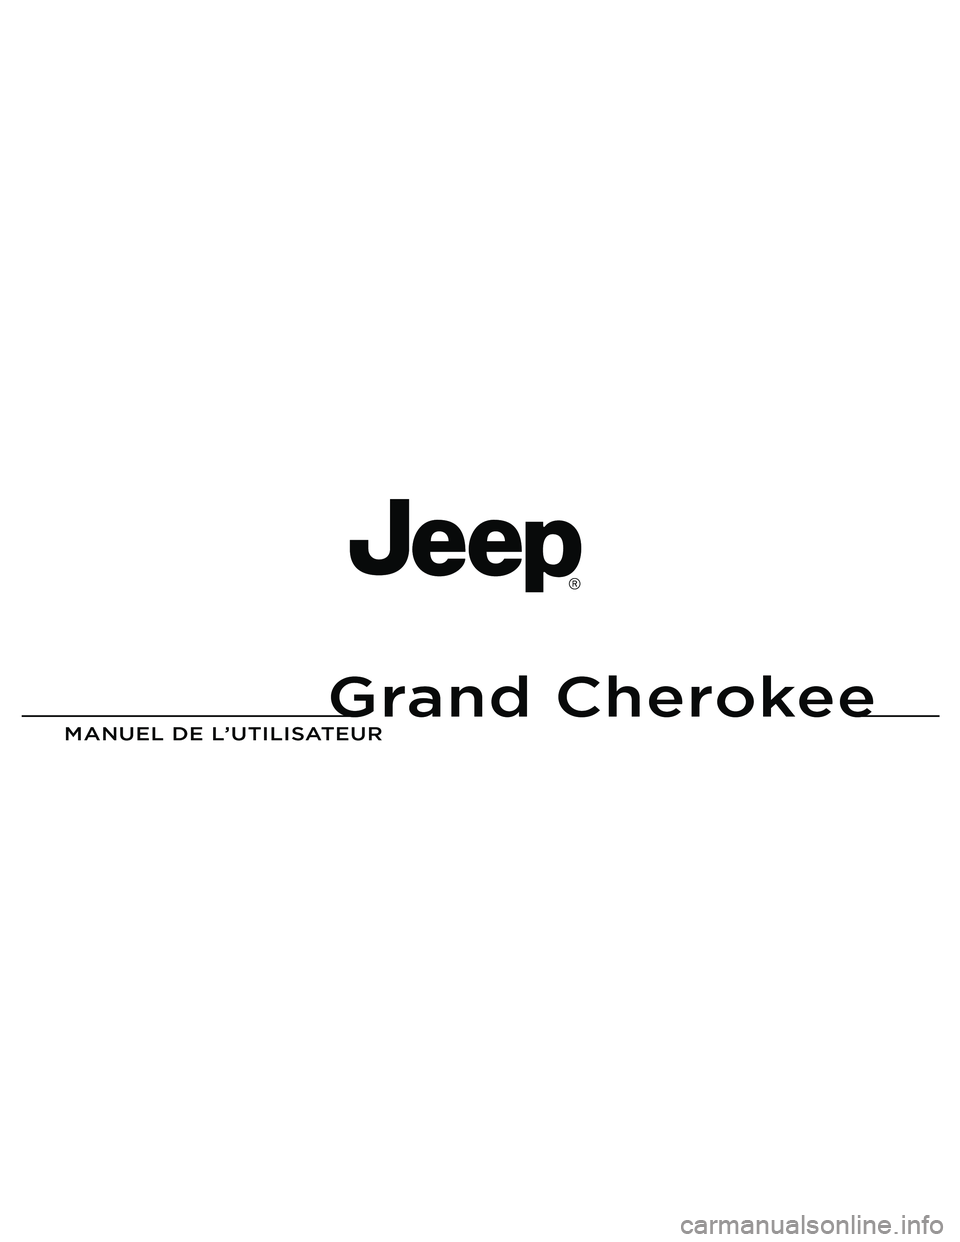 JEEP GRAND CHEROKEE 2010  Notice dentretien (in French) Grand Cherokee
MANUEL DE L’U\fILISA\fEUR 